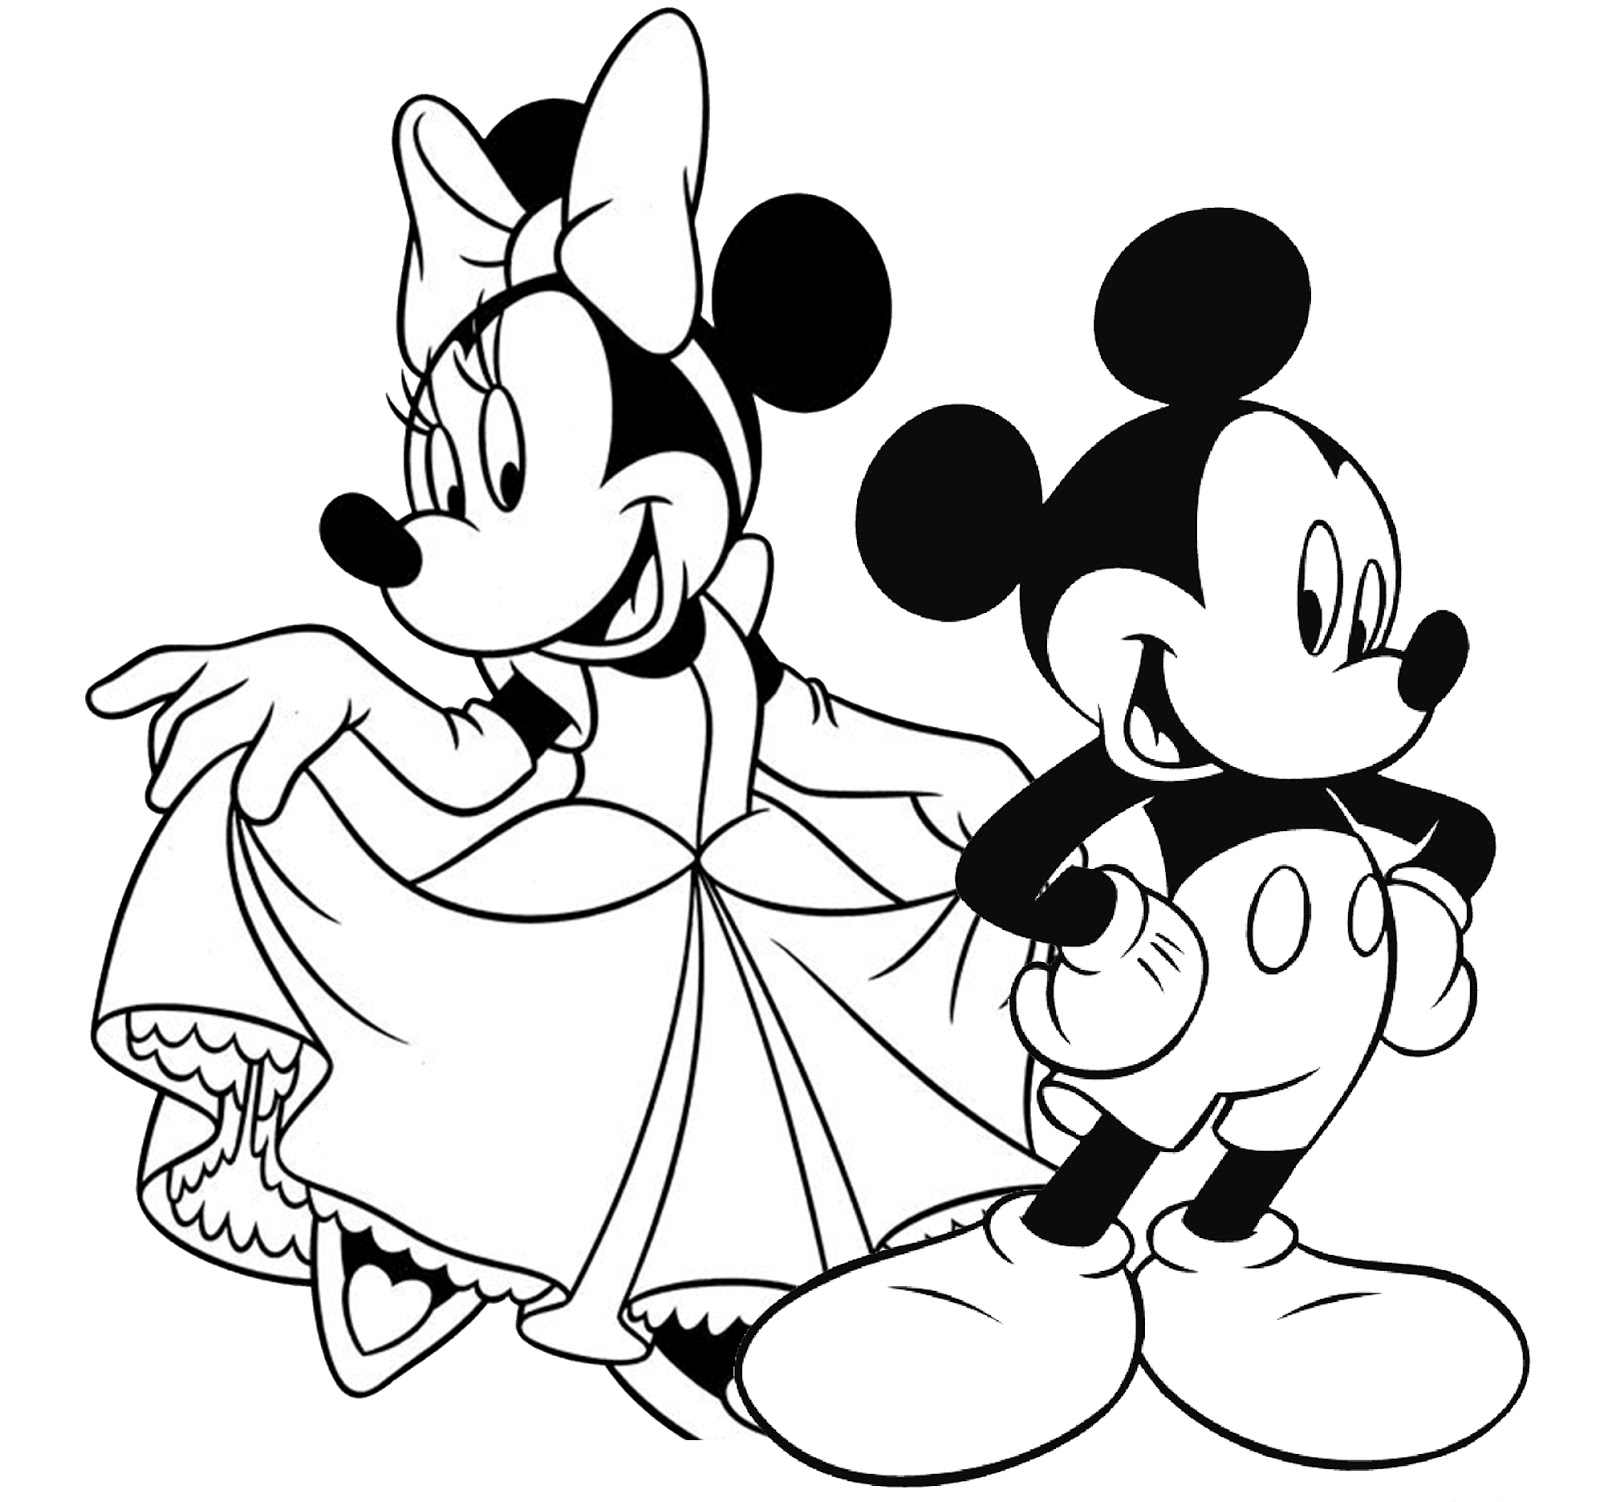 Belajar mewarnai gambar mickey mouse dan minnie mouse 